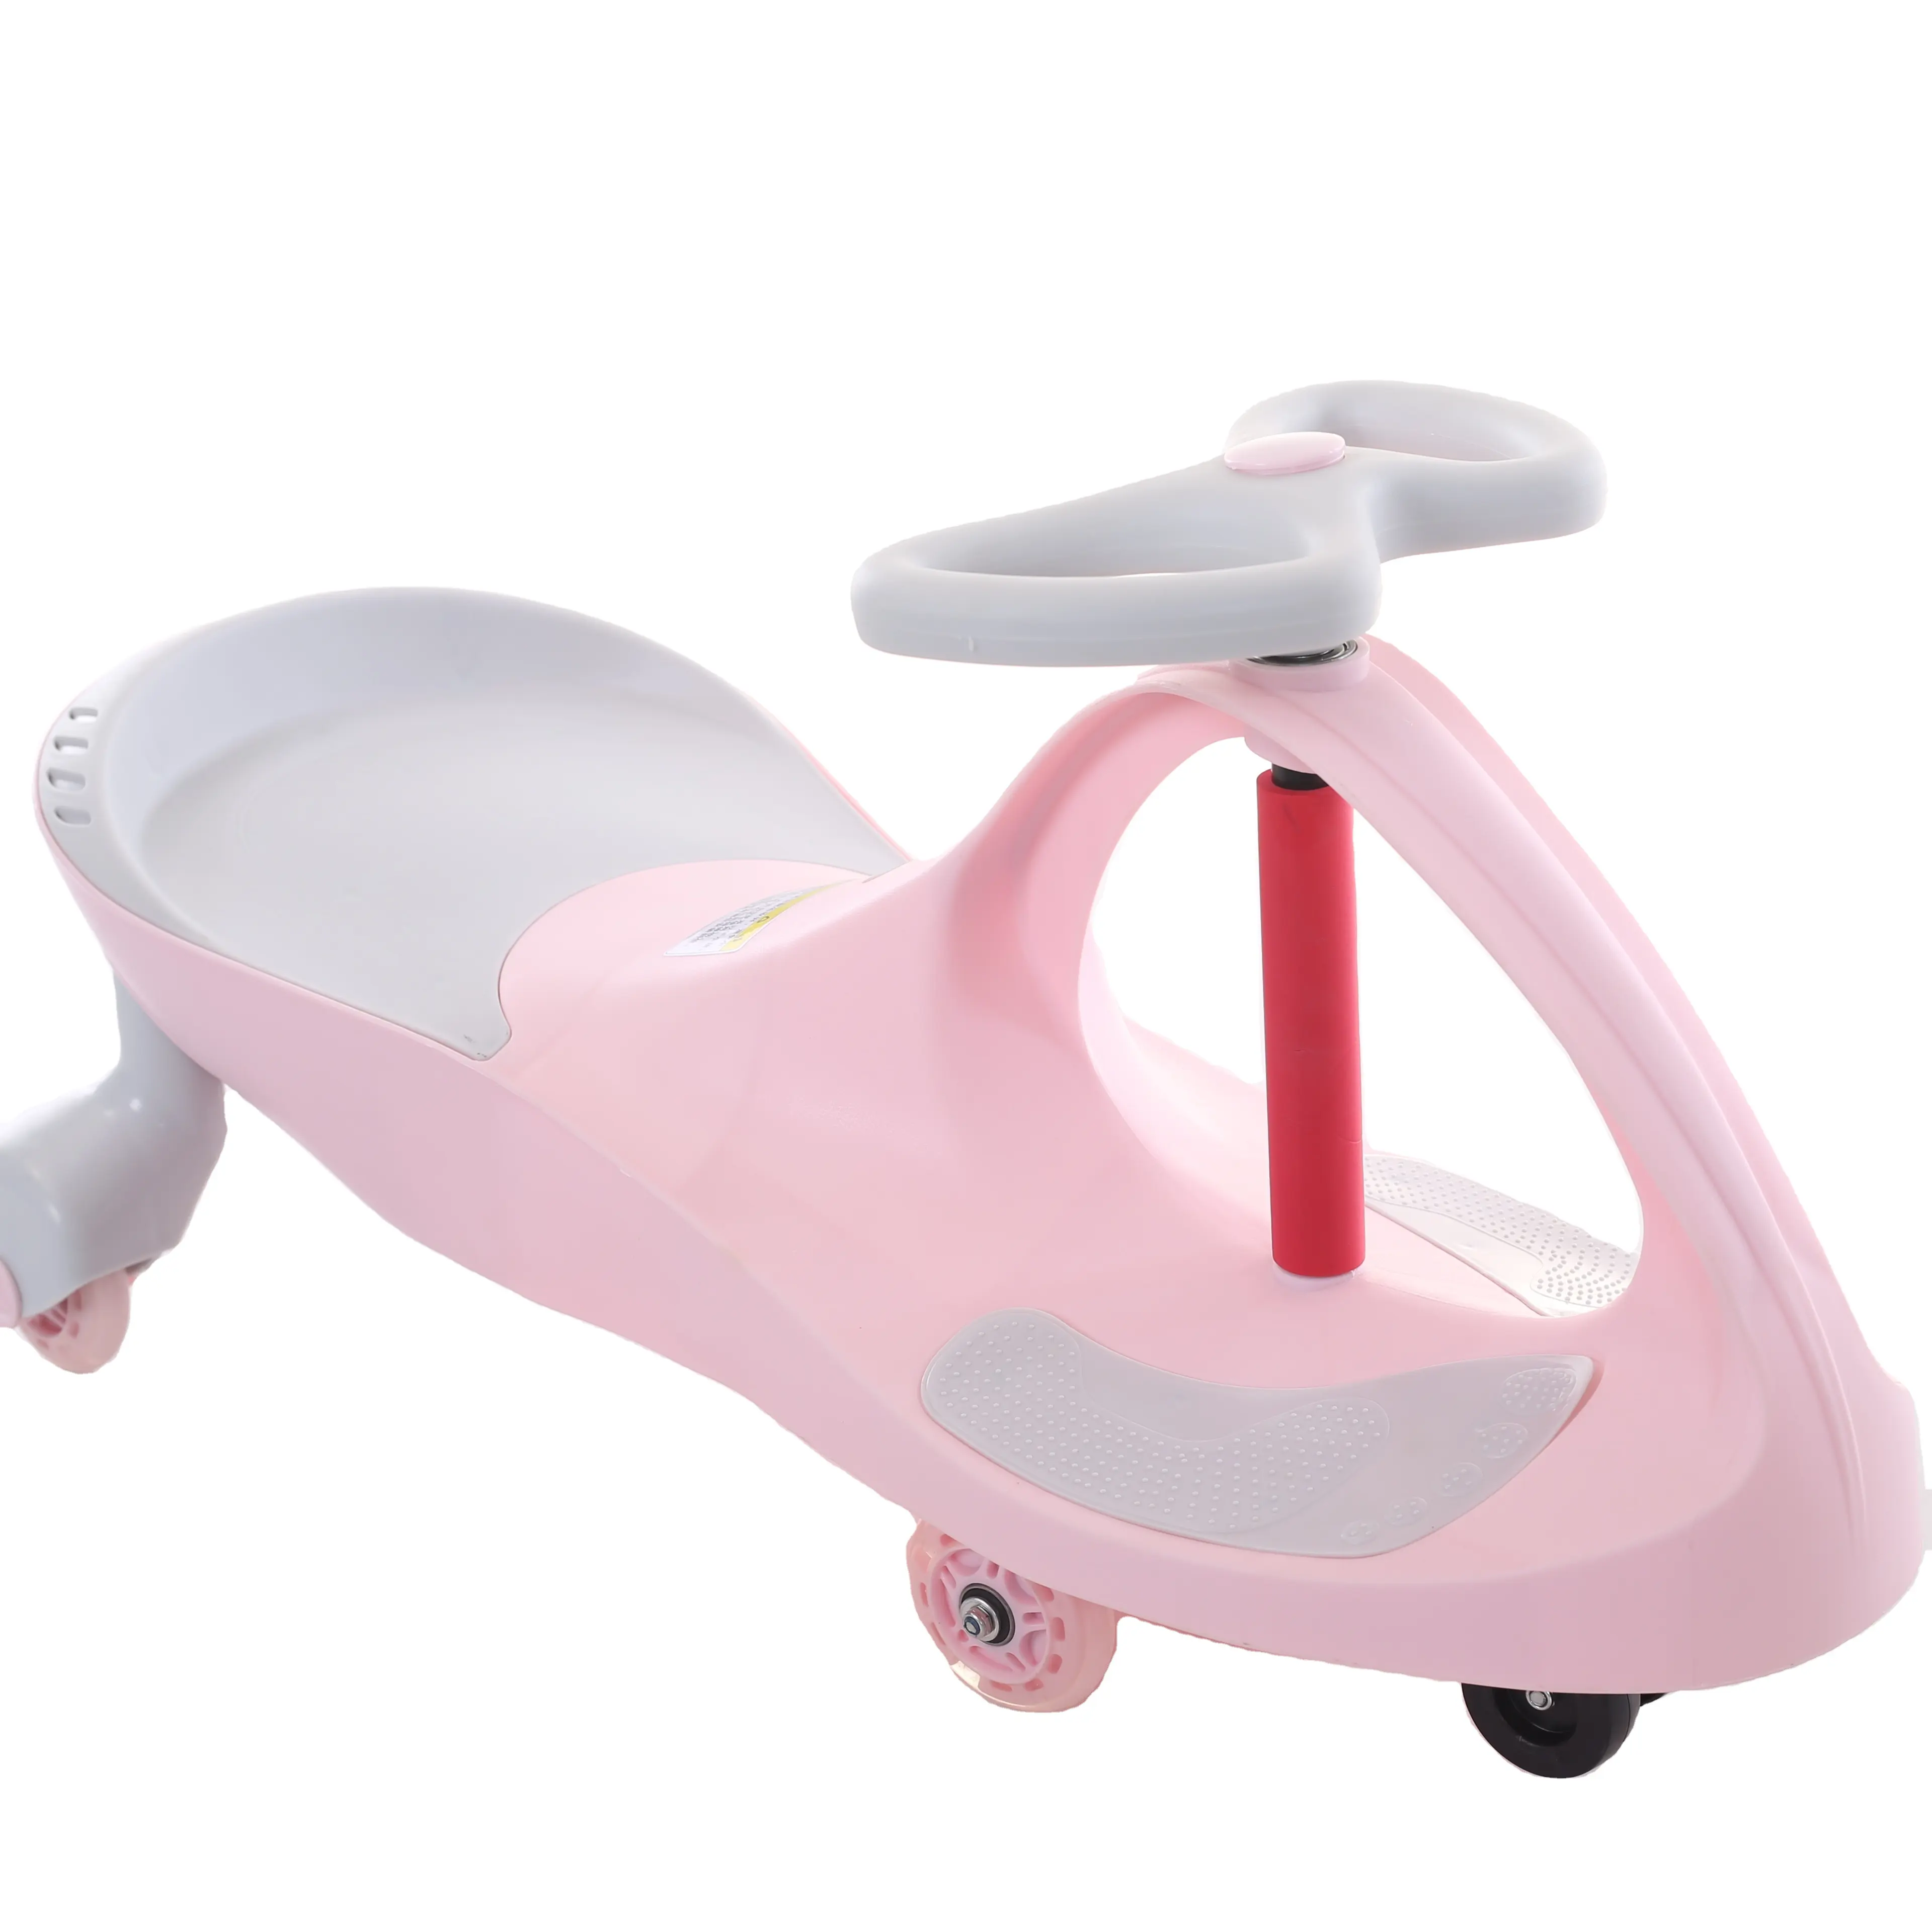 PU Flashing Wheel Baby Ride On Car Toys kids Swing Wiggle Kids Twist Car With Push Bar